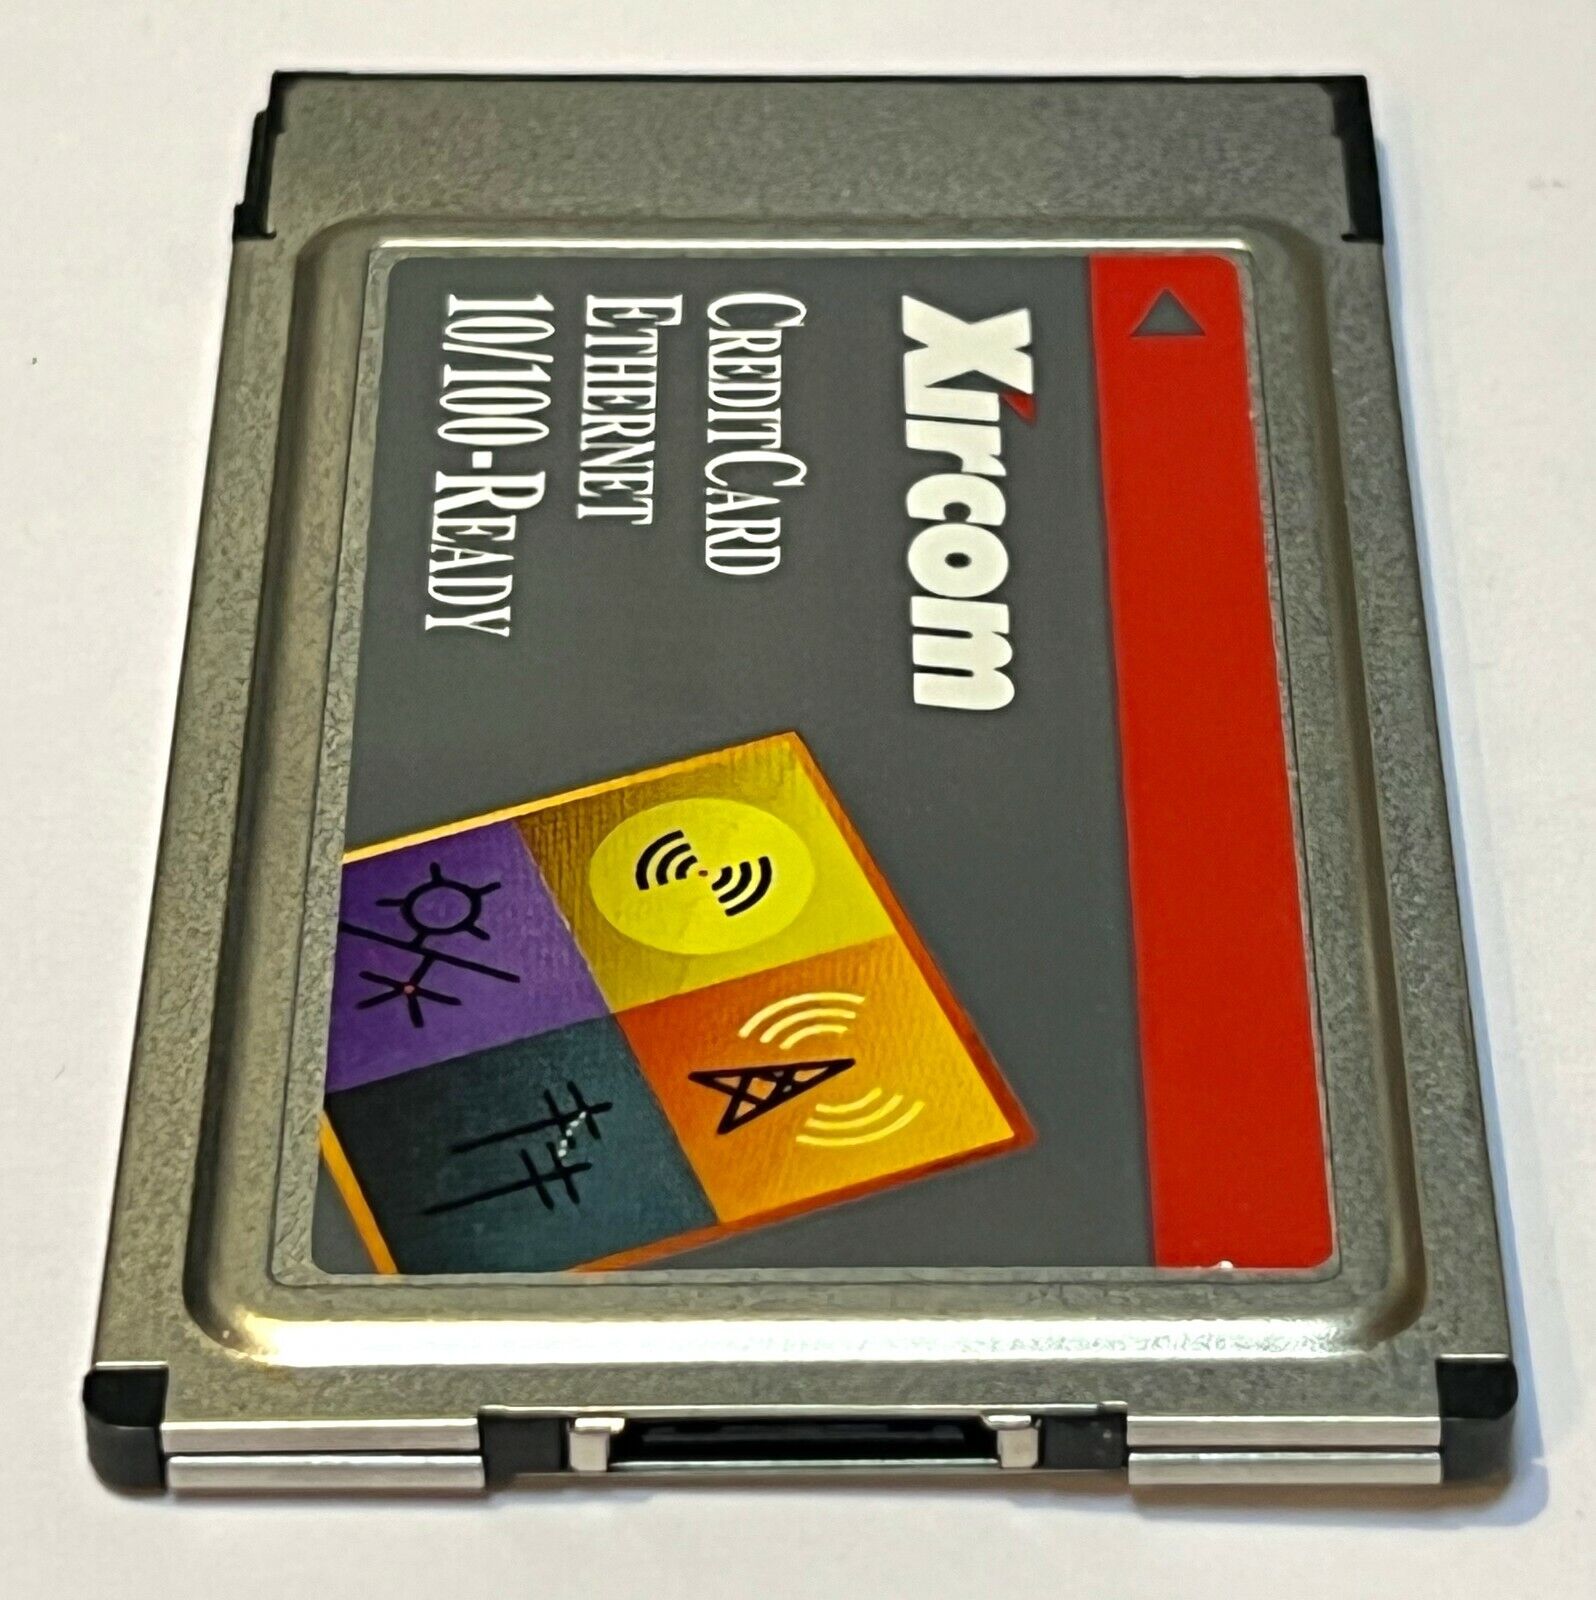 Xircom CE3B-100BTX CreditCard Ethernet 10/100 Adapter PCMCIA NIC Card - No cable